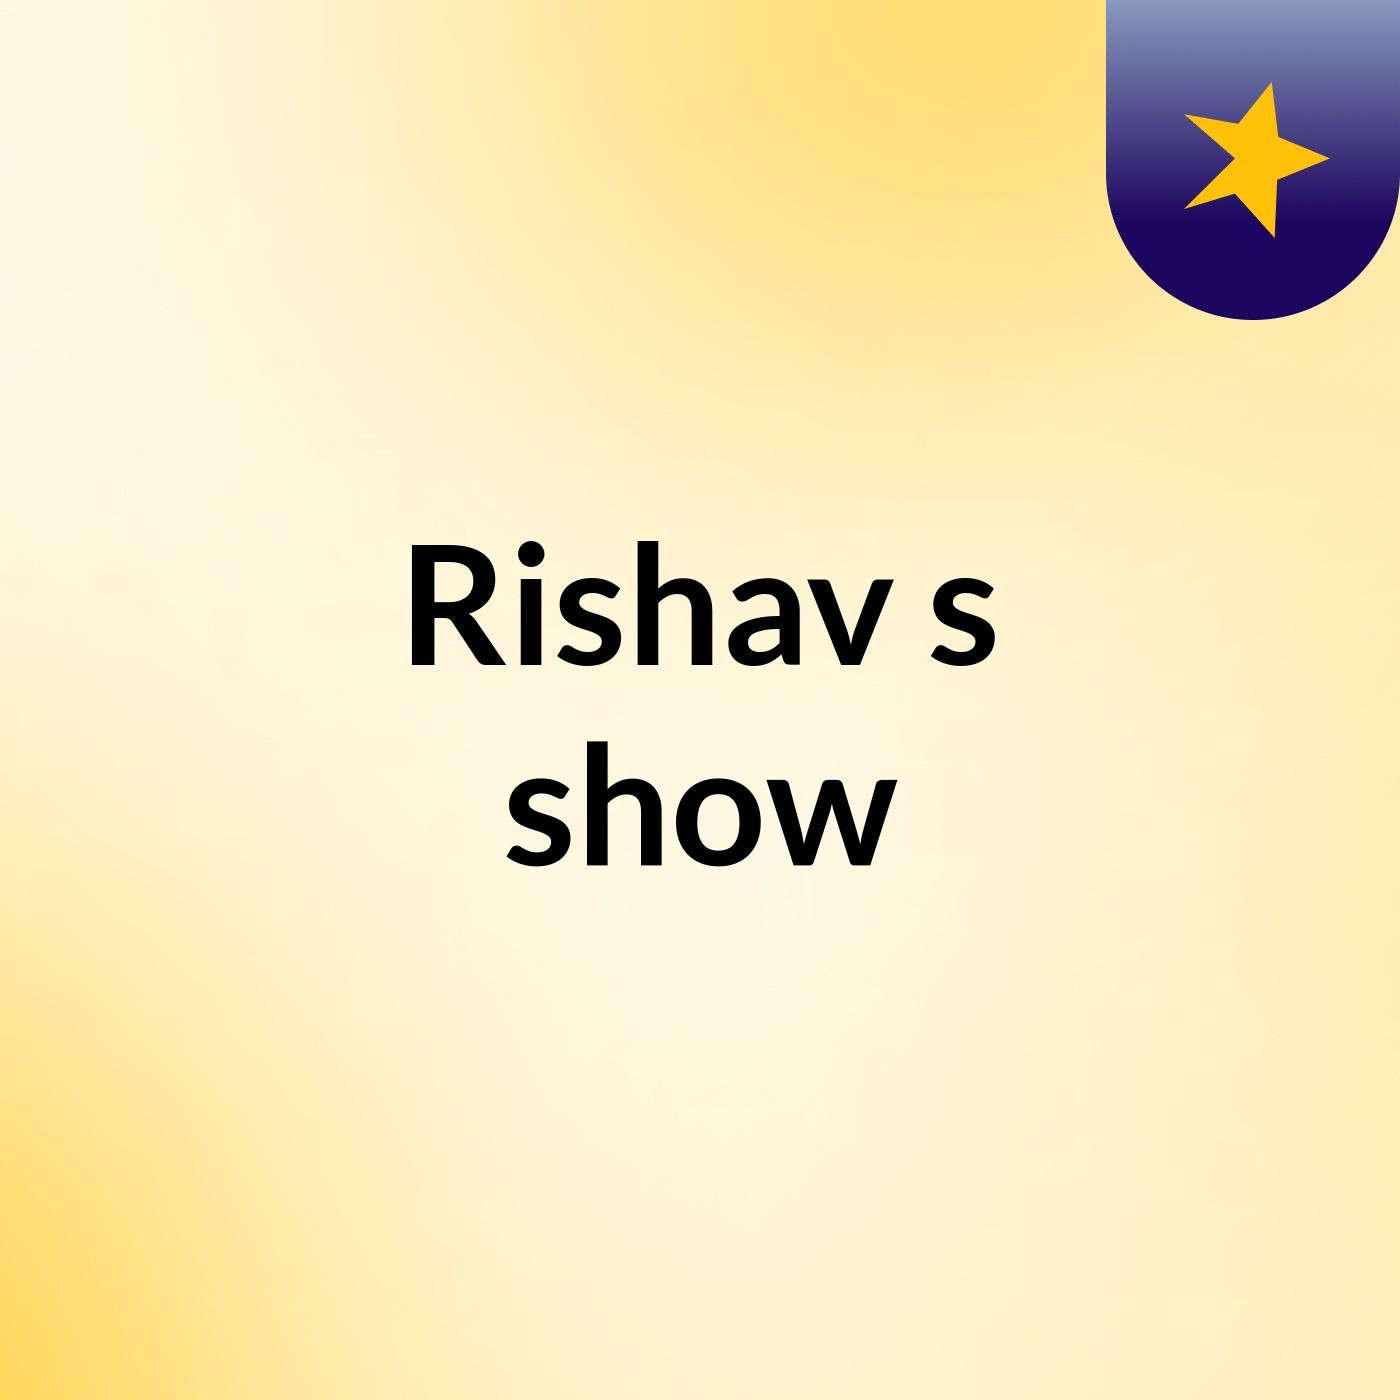 Rishav's show